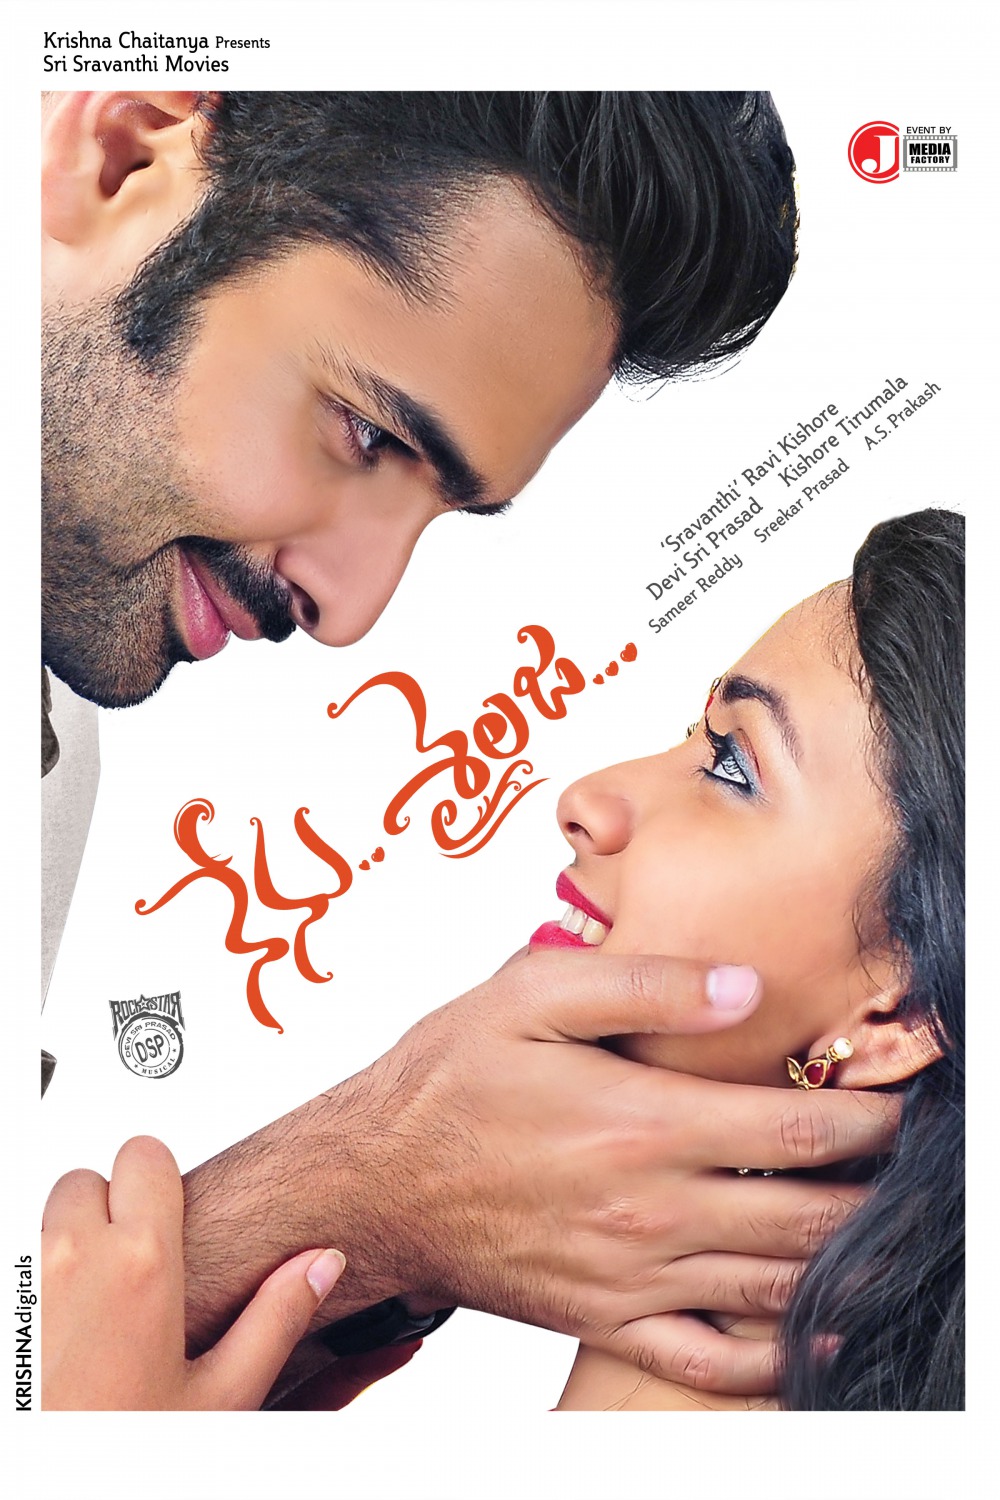 Extra Large Movie Poster Image for Nenu Sailaja (#19 of 19)